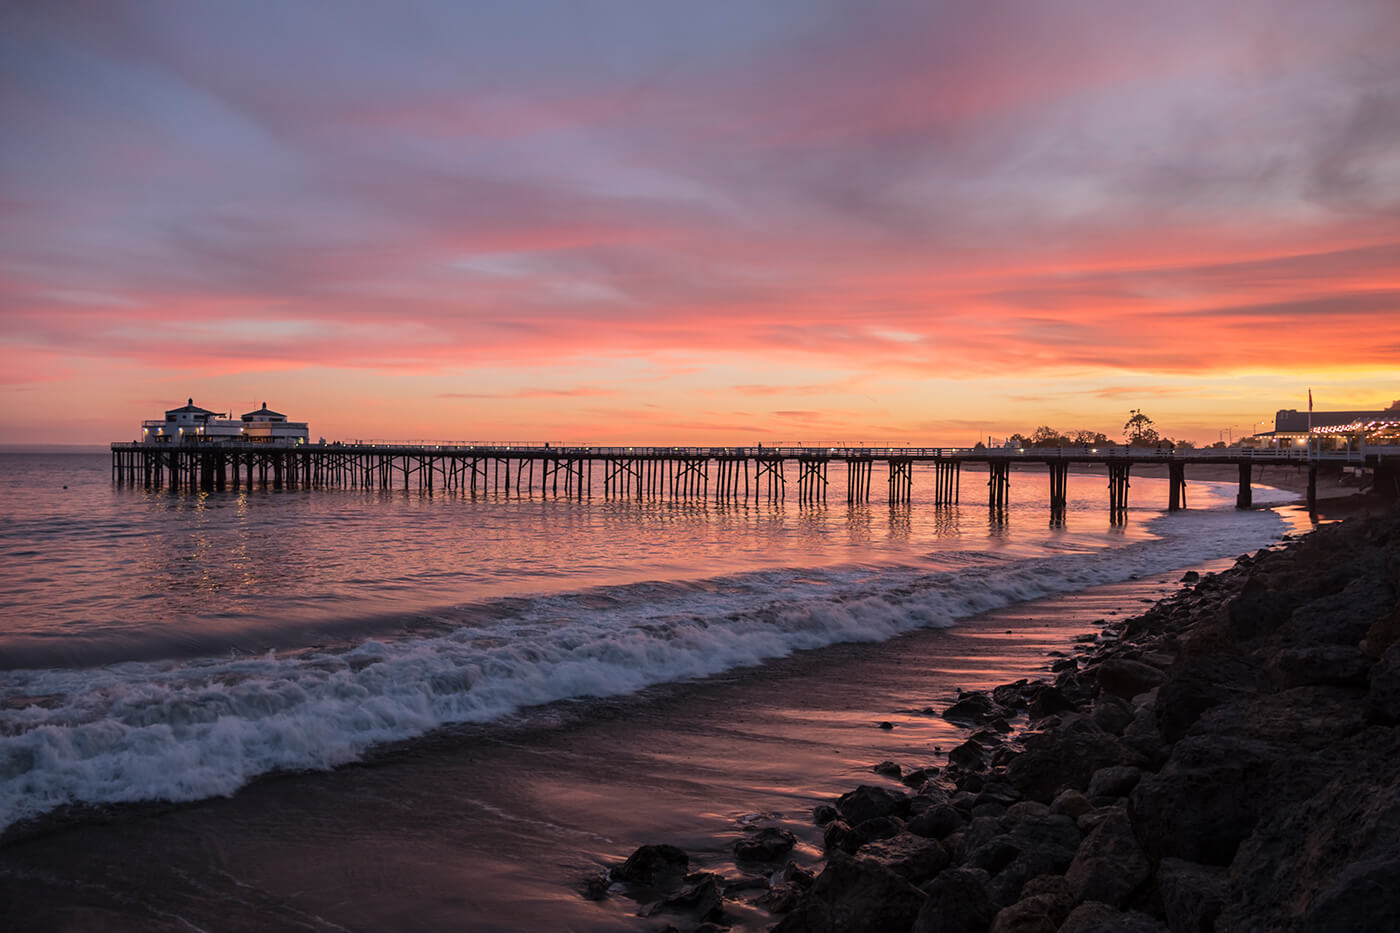 Sunset view of pier in Malibu